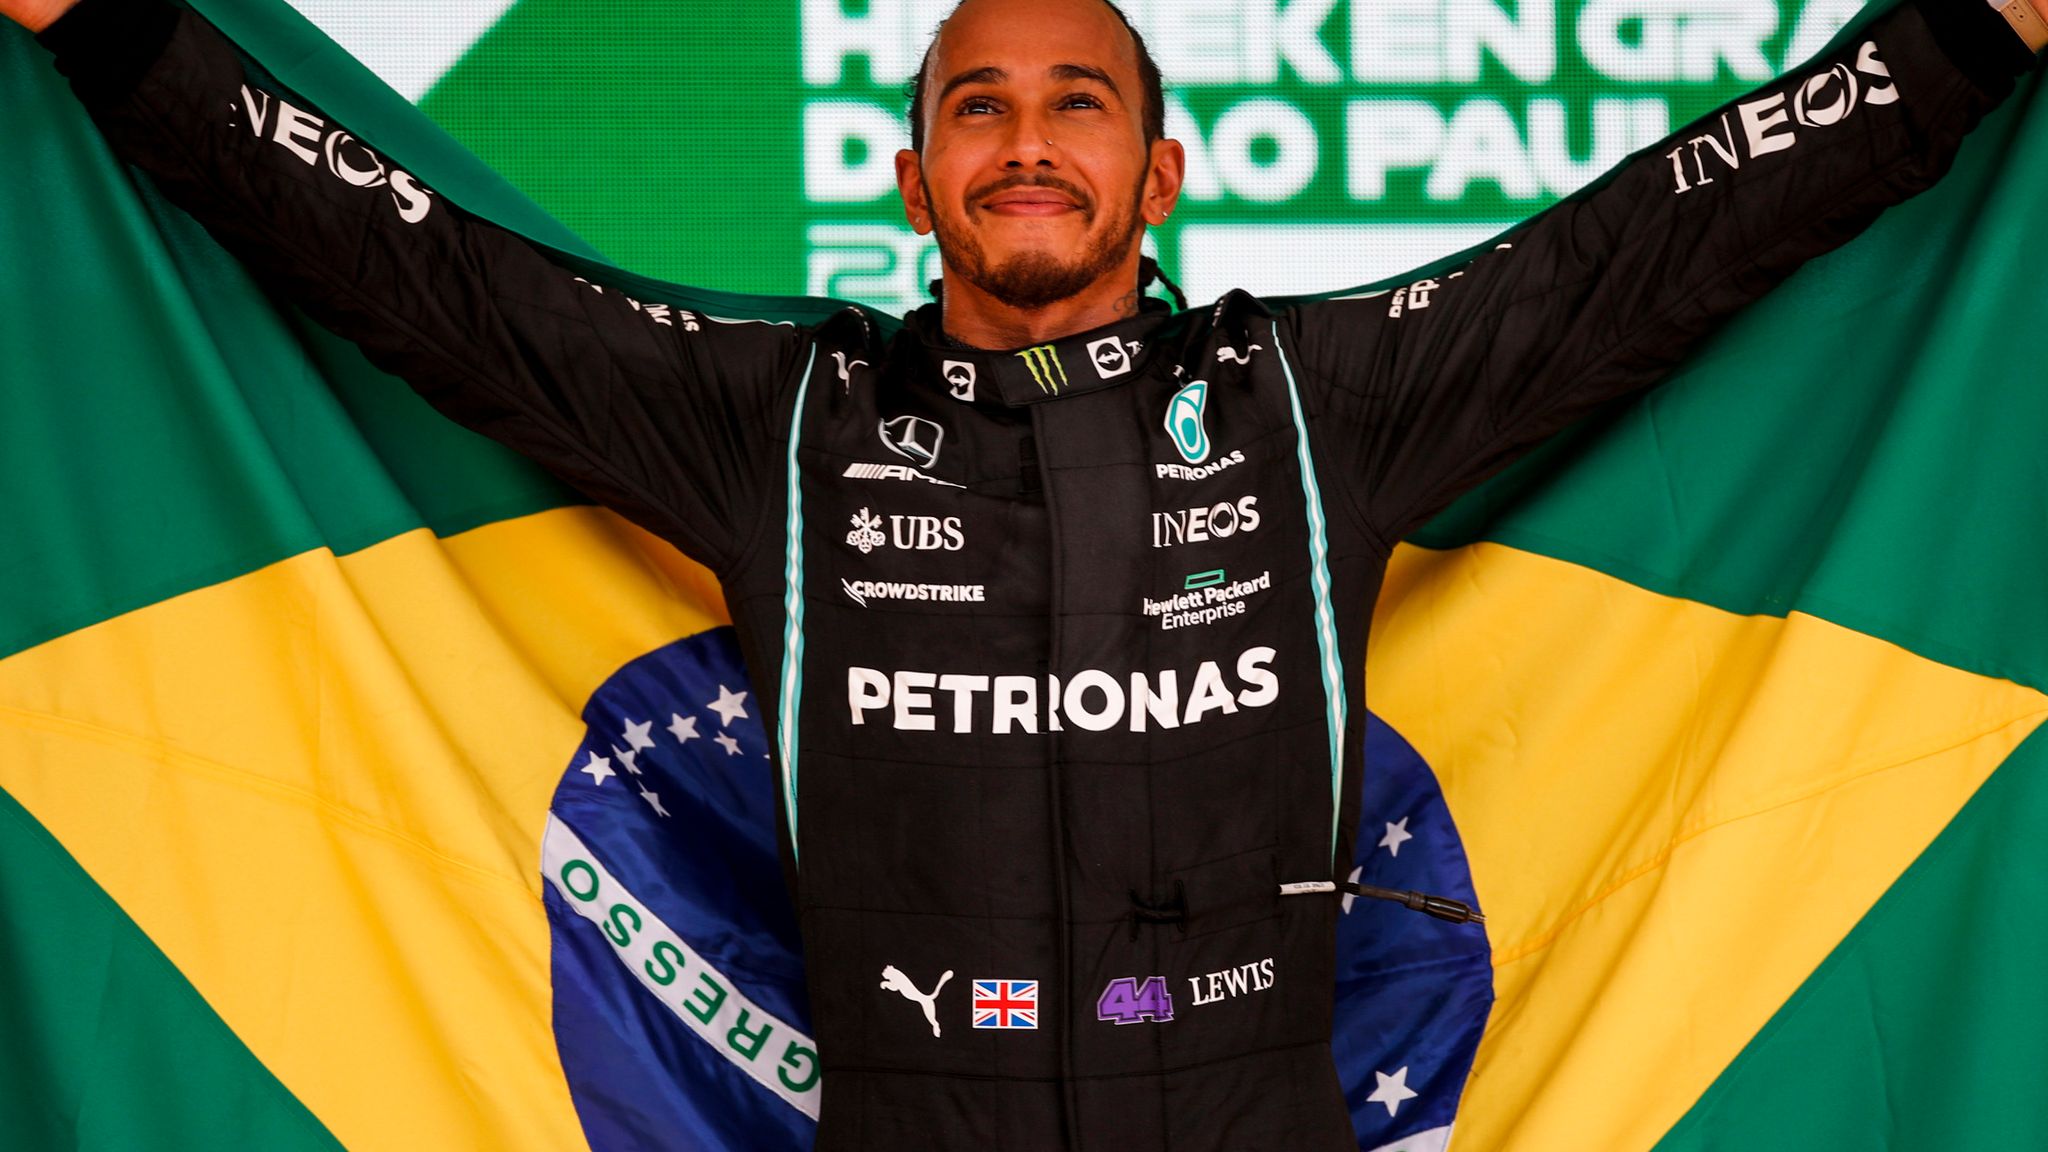 Honorary Brazilian Hamilton would love a 'home' win